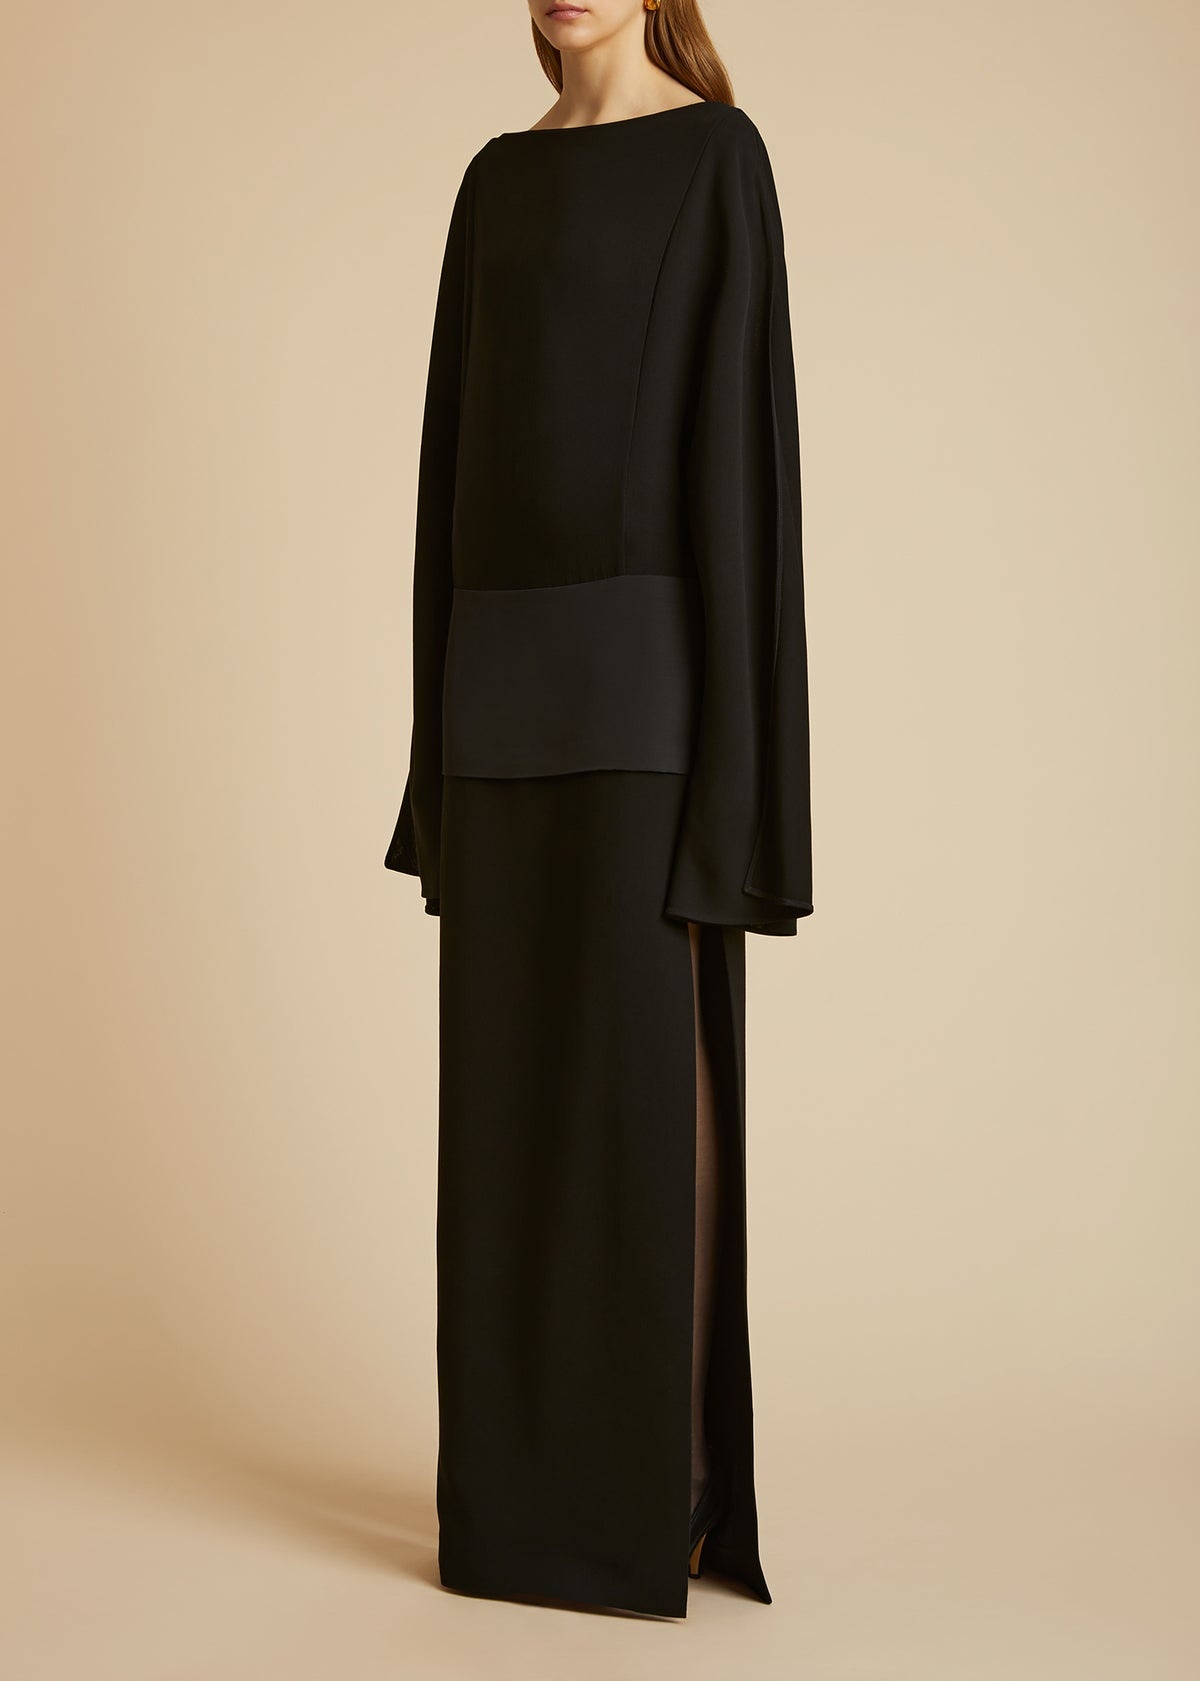 The Nanette Dress in Black - 1